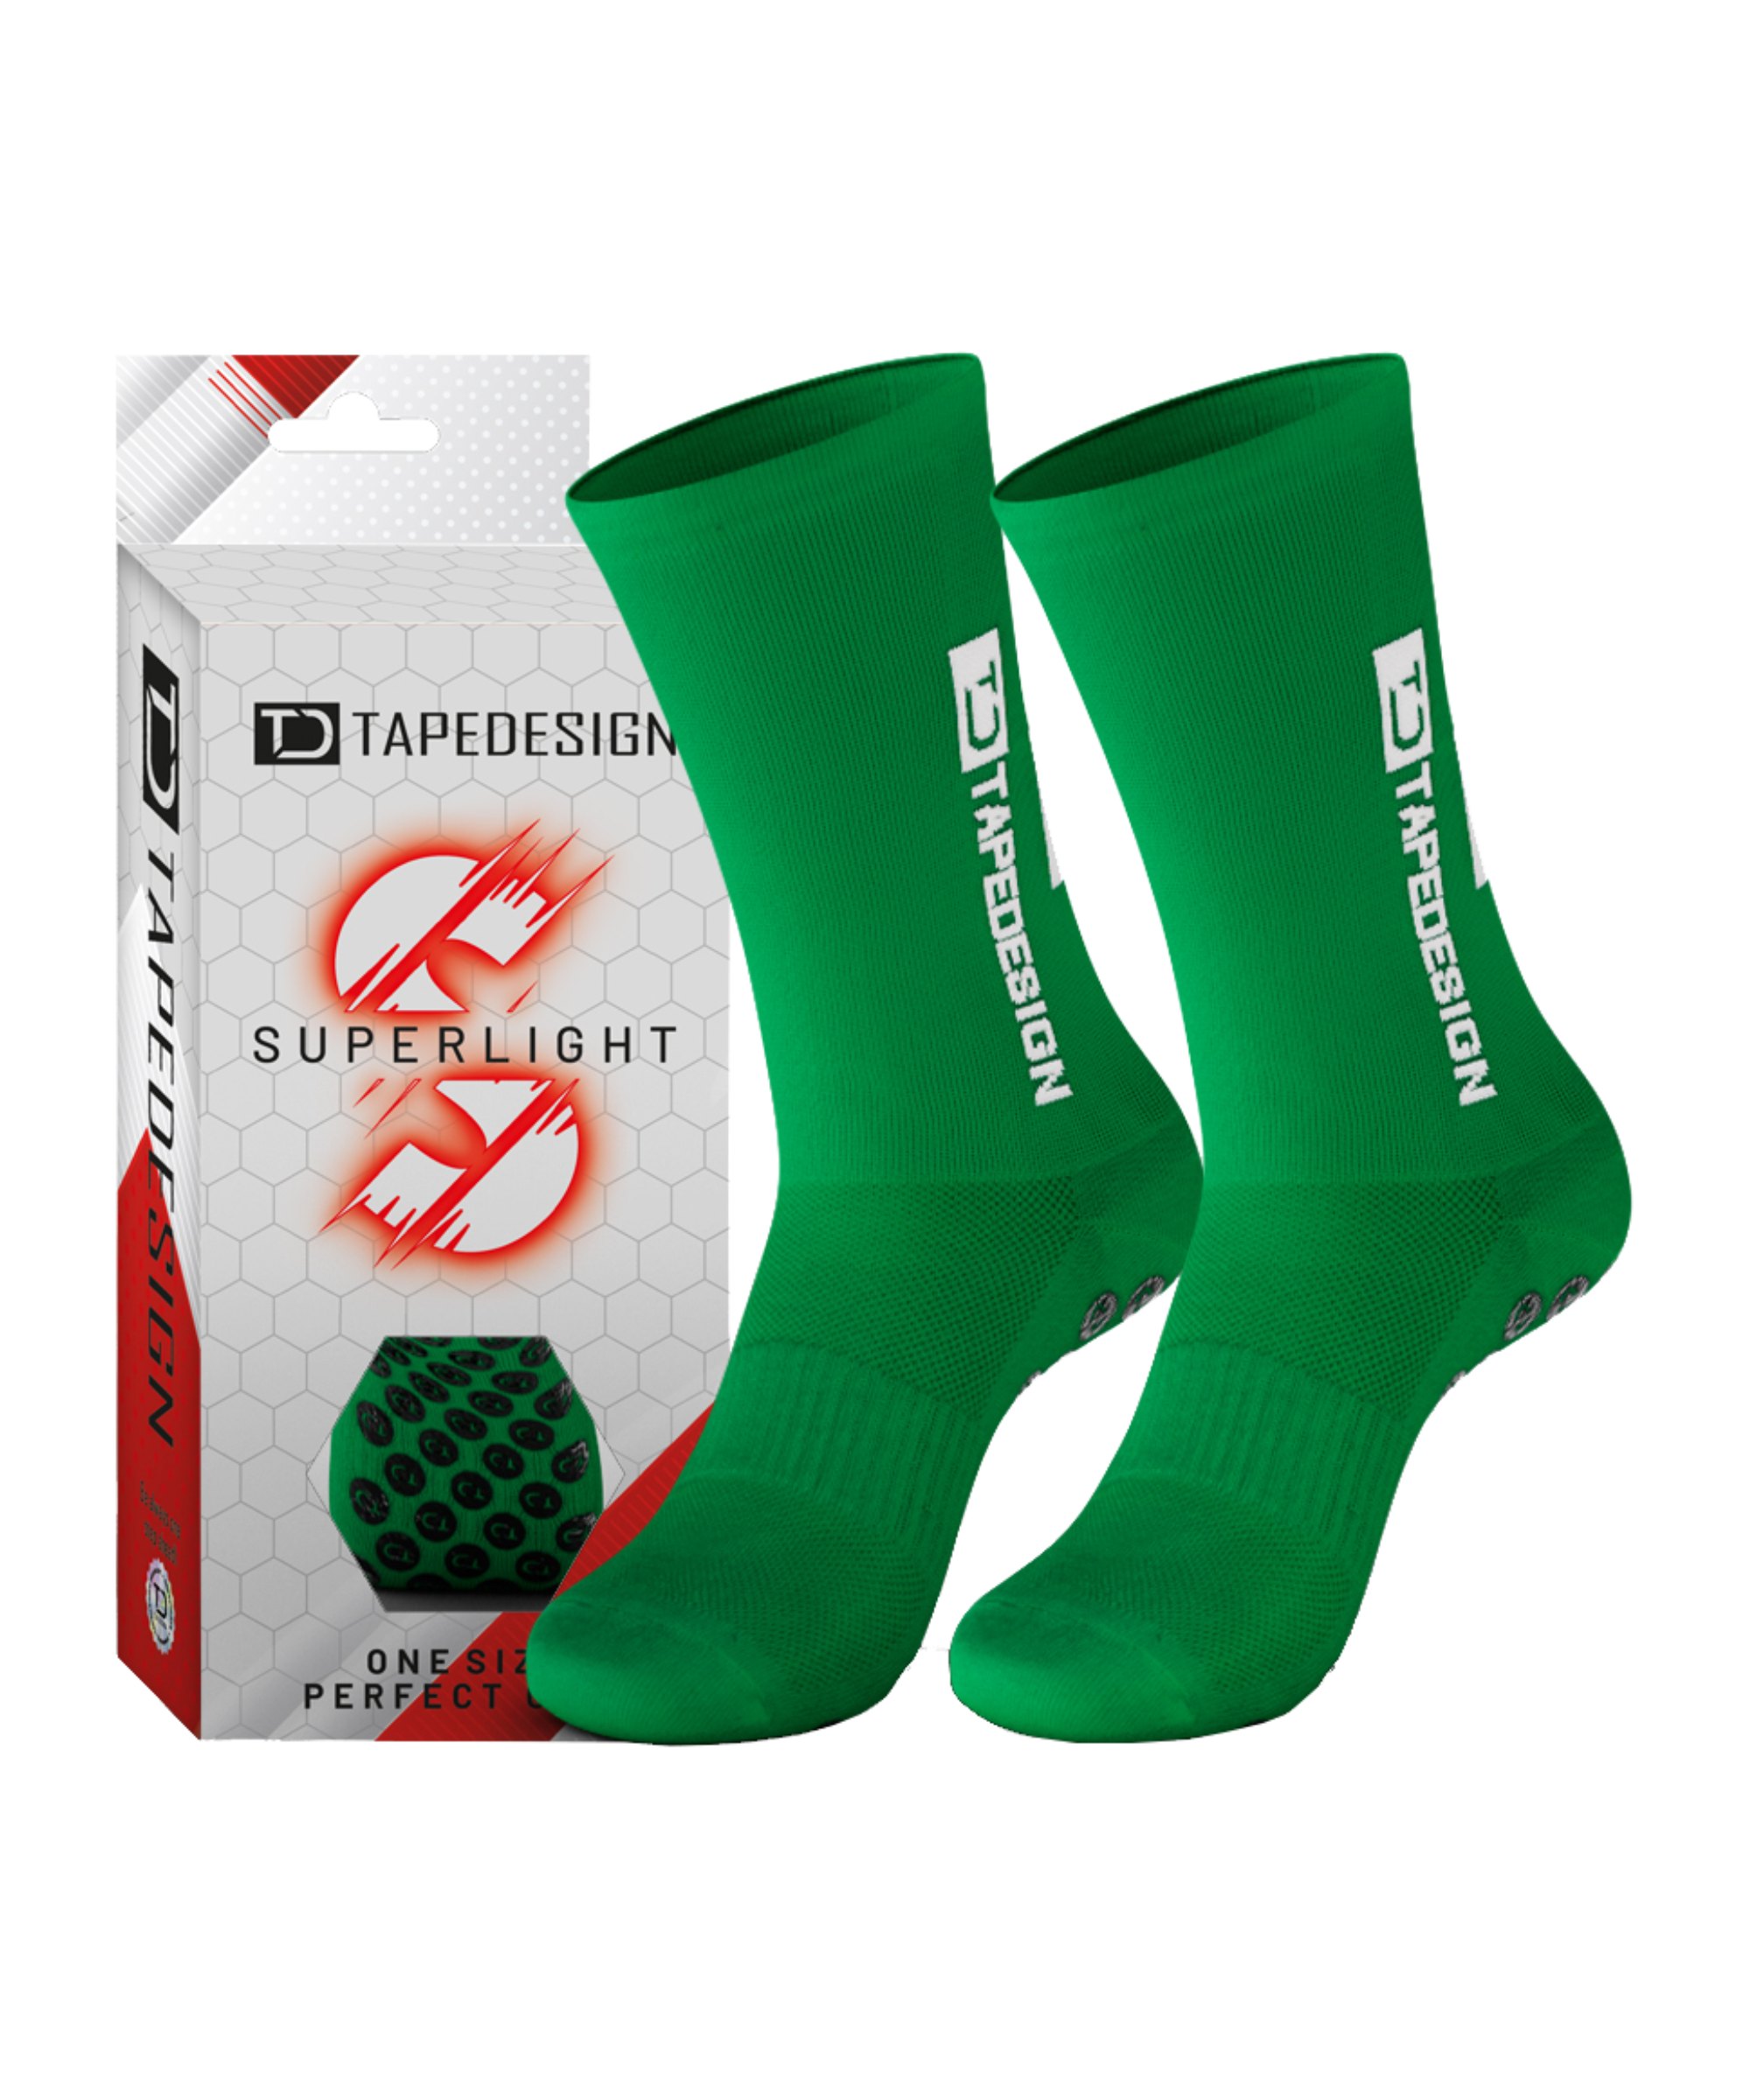 Tapedesign Gripsocks Superlight Socken Grün - gruen